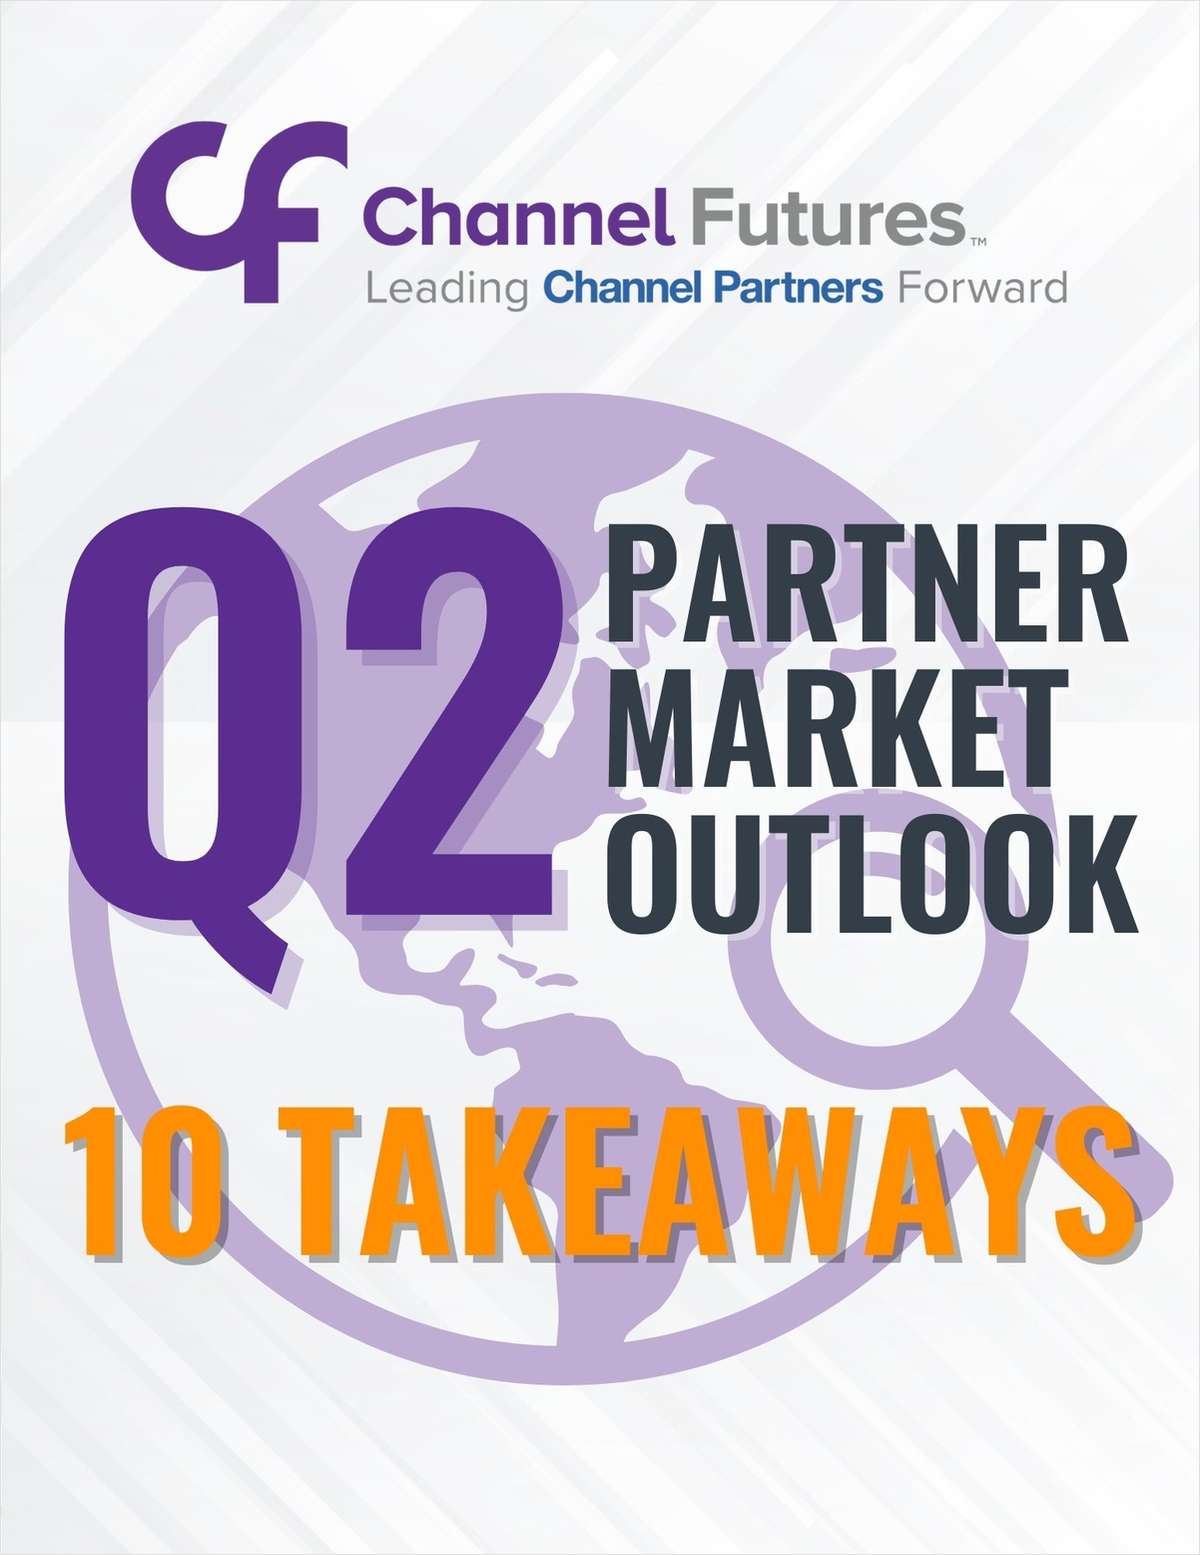 Channel Futures Q2 Partner Market Outlook: 10 Takeaways